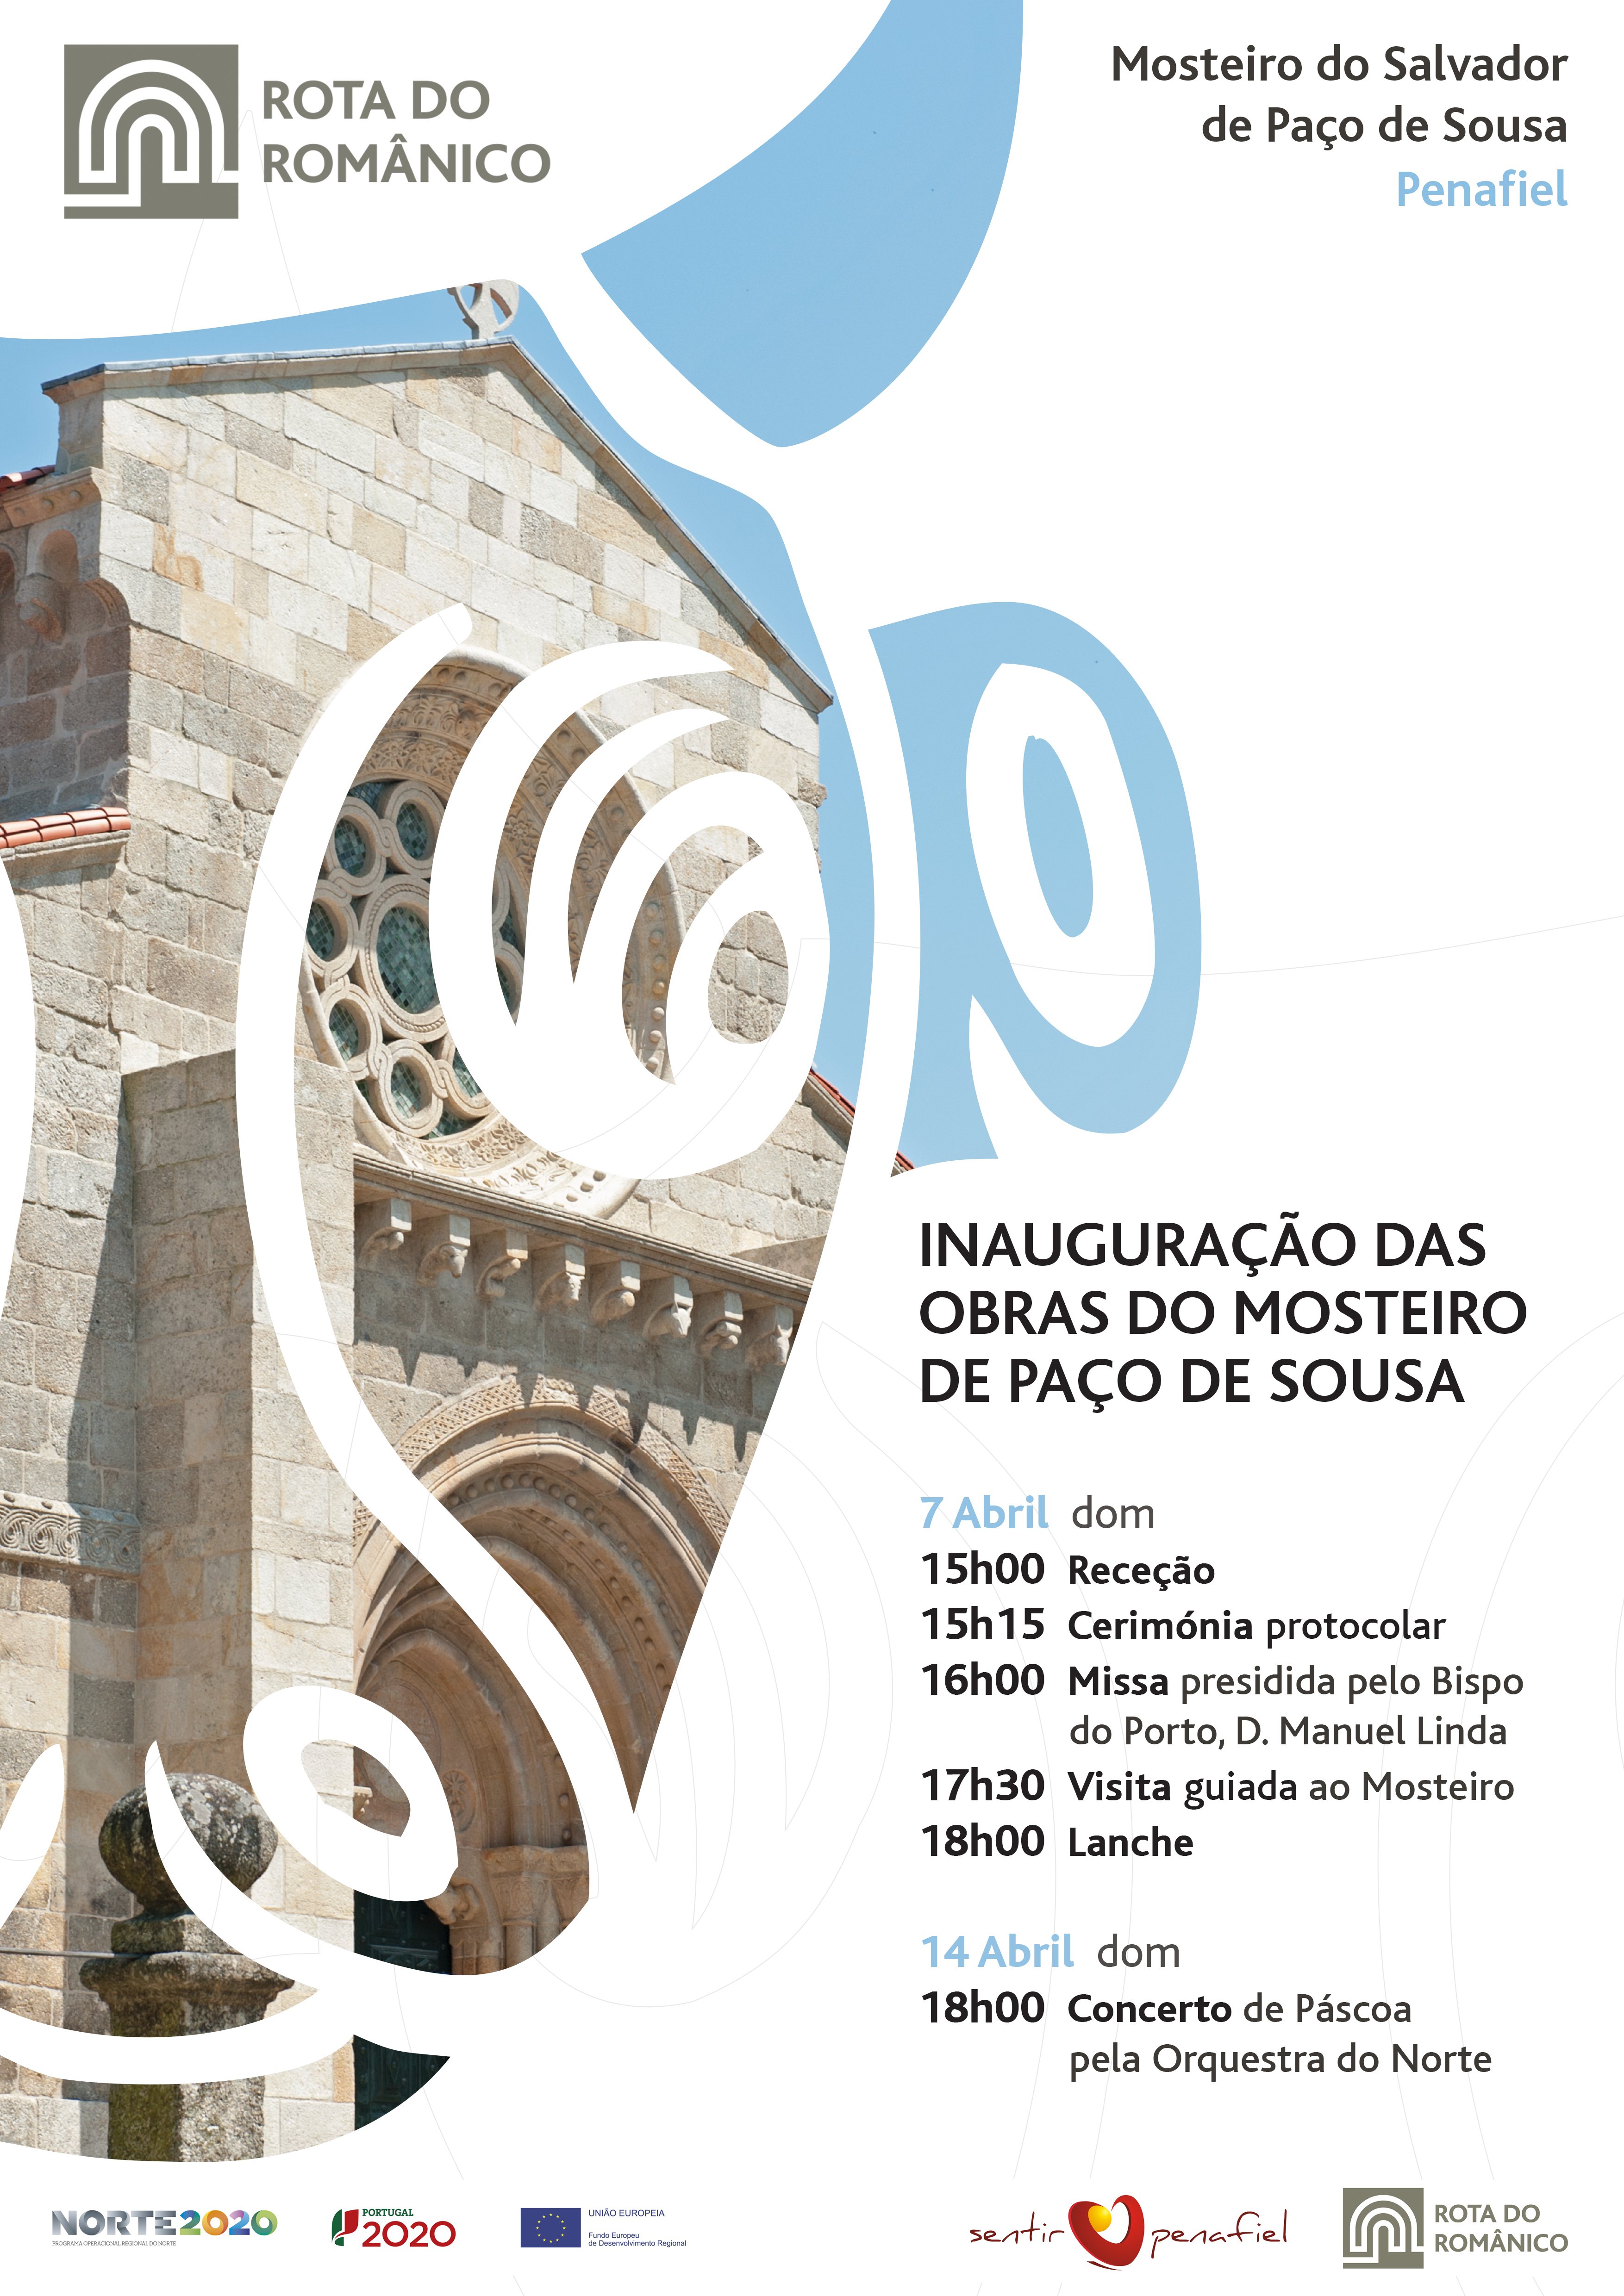 Monastery of Paço de Sousa: Construction Work Completion